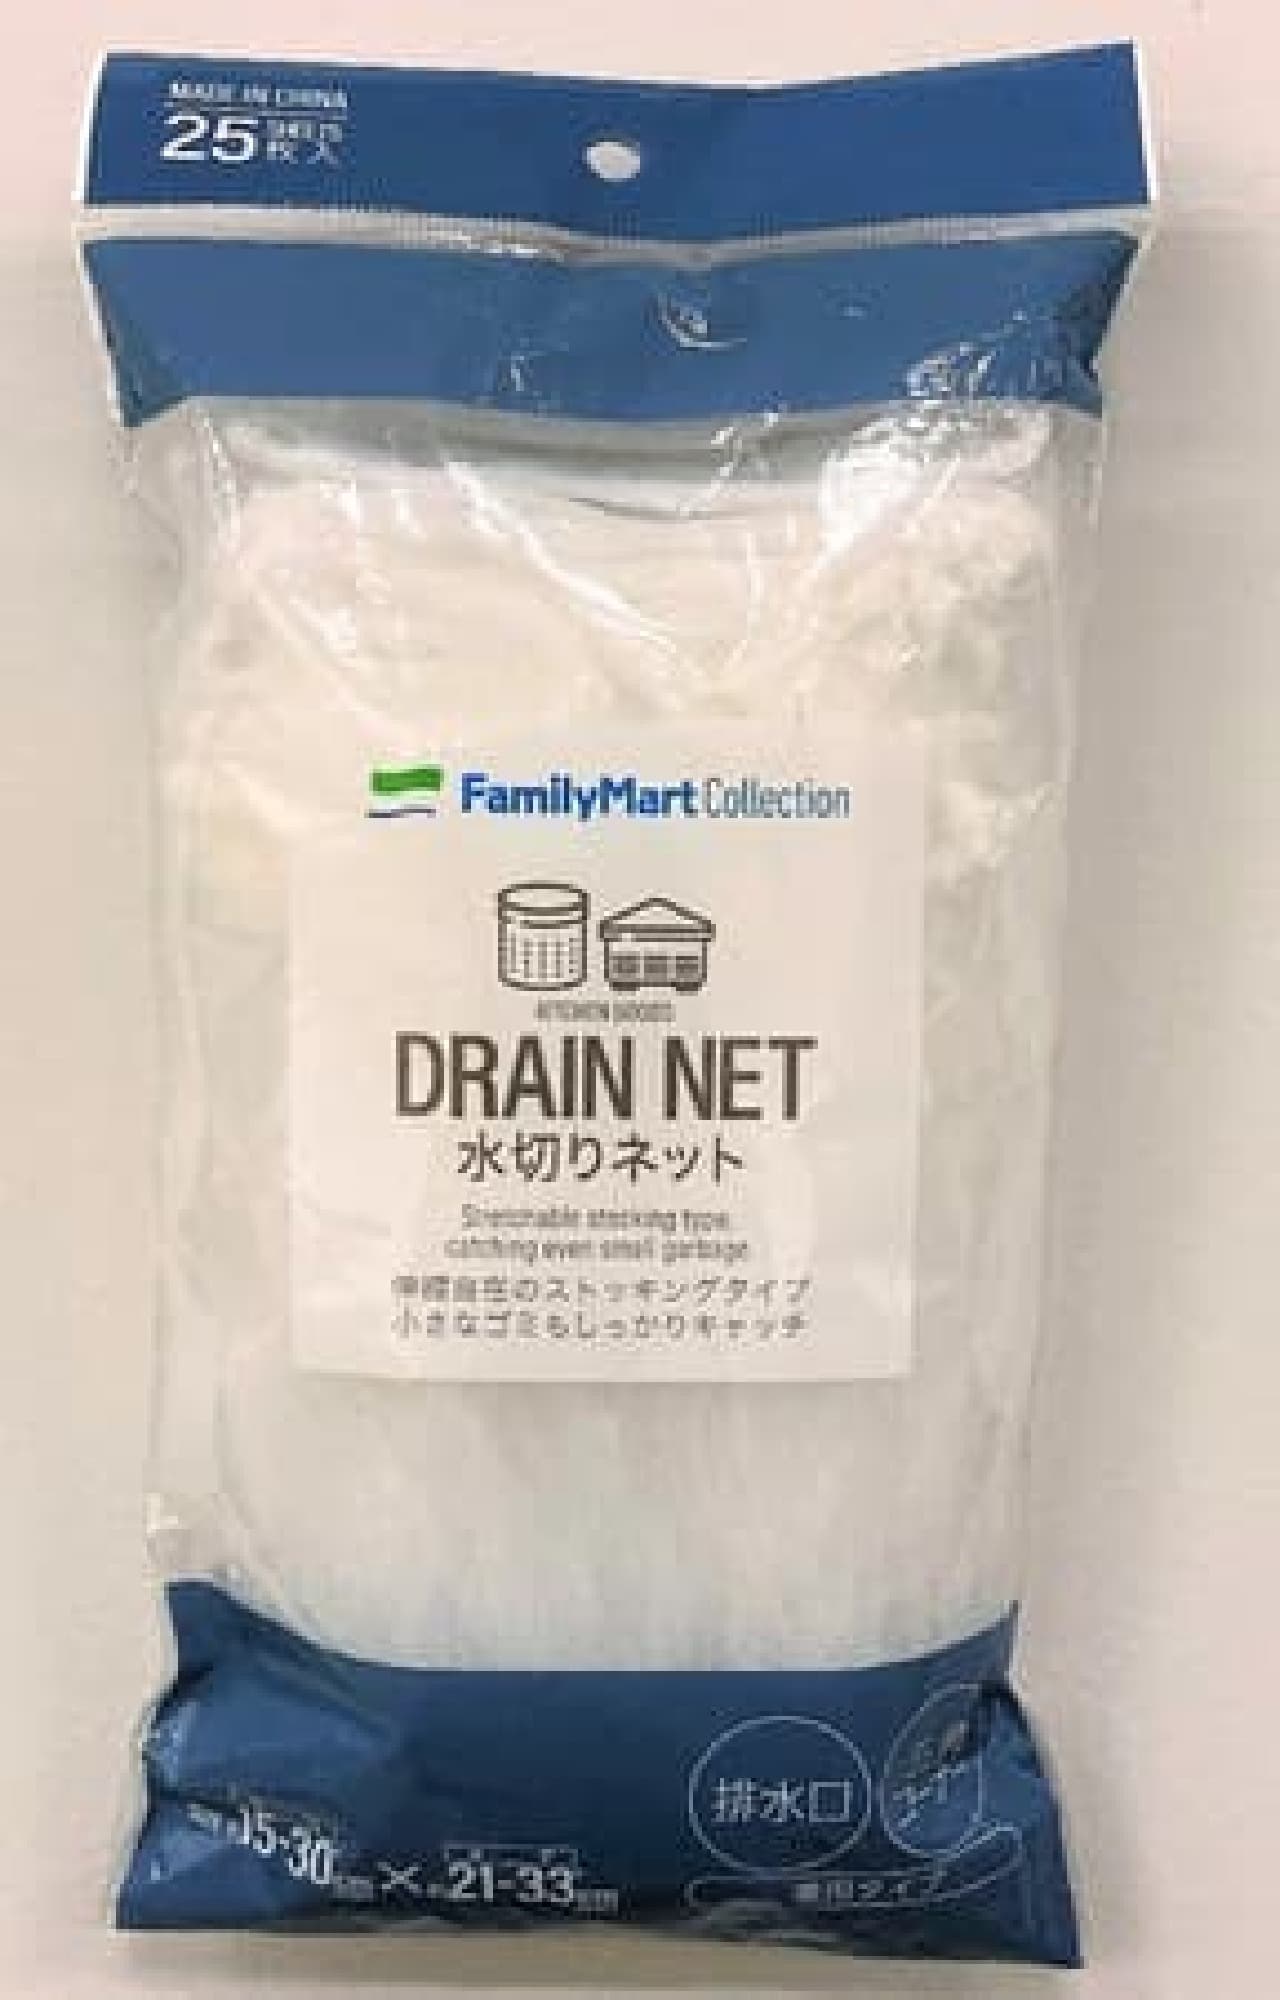 110 yen uniform aluminum foil and wrap are now available at FamilyMart --A bag clip that is convenient for half-eaten sweets